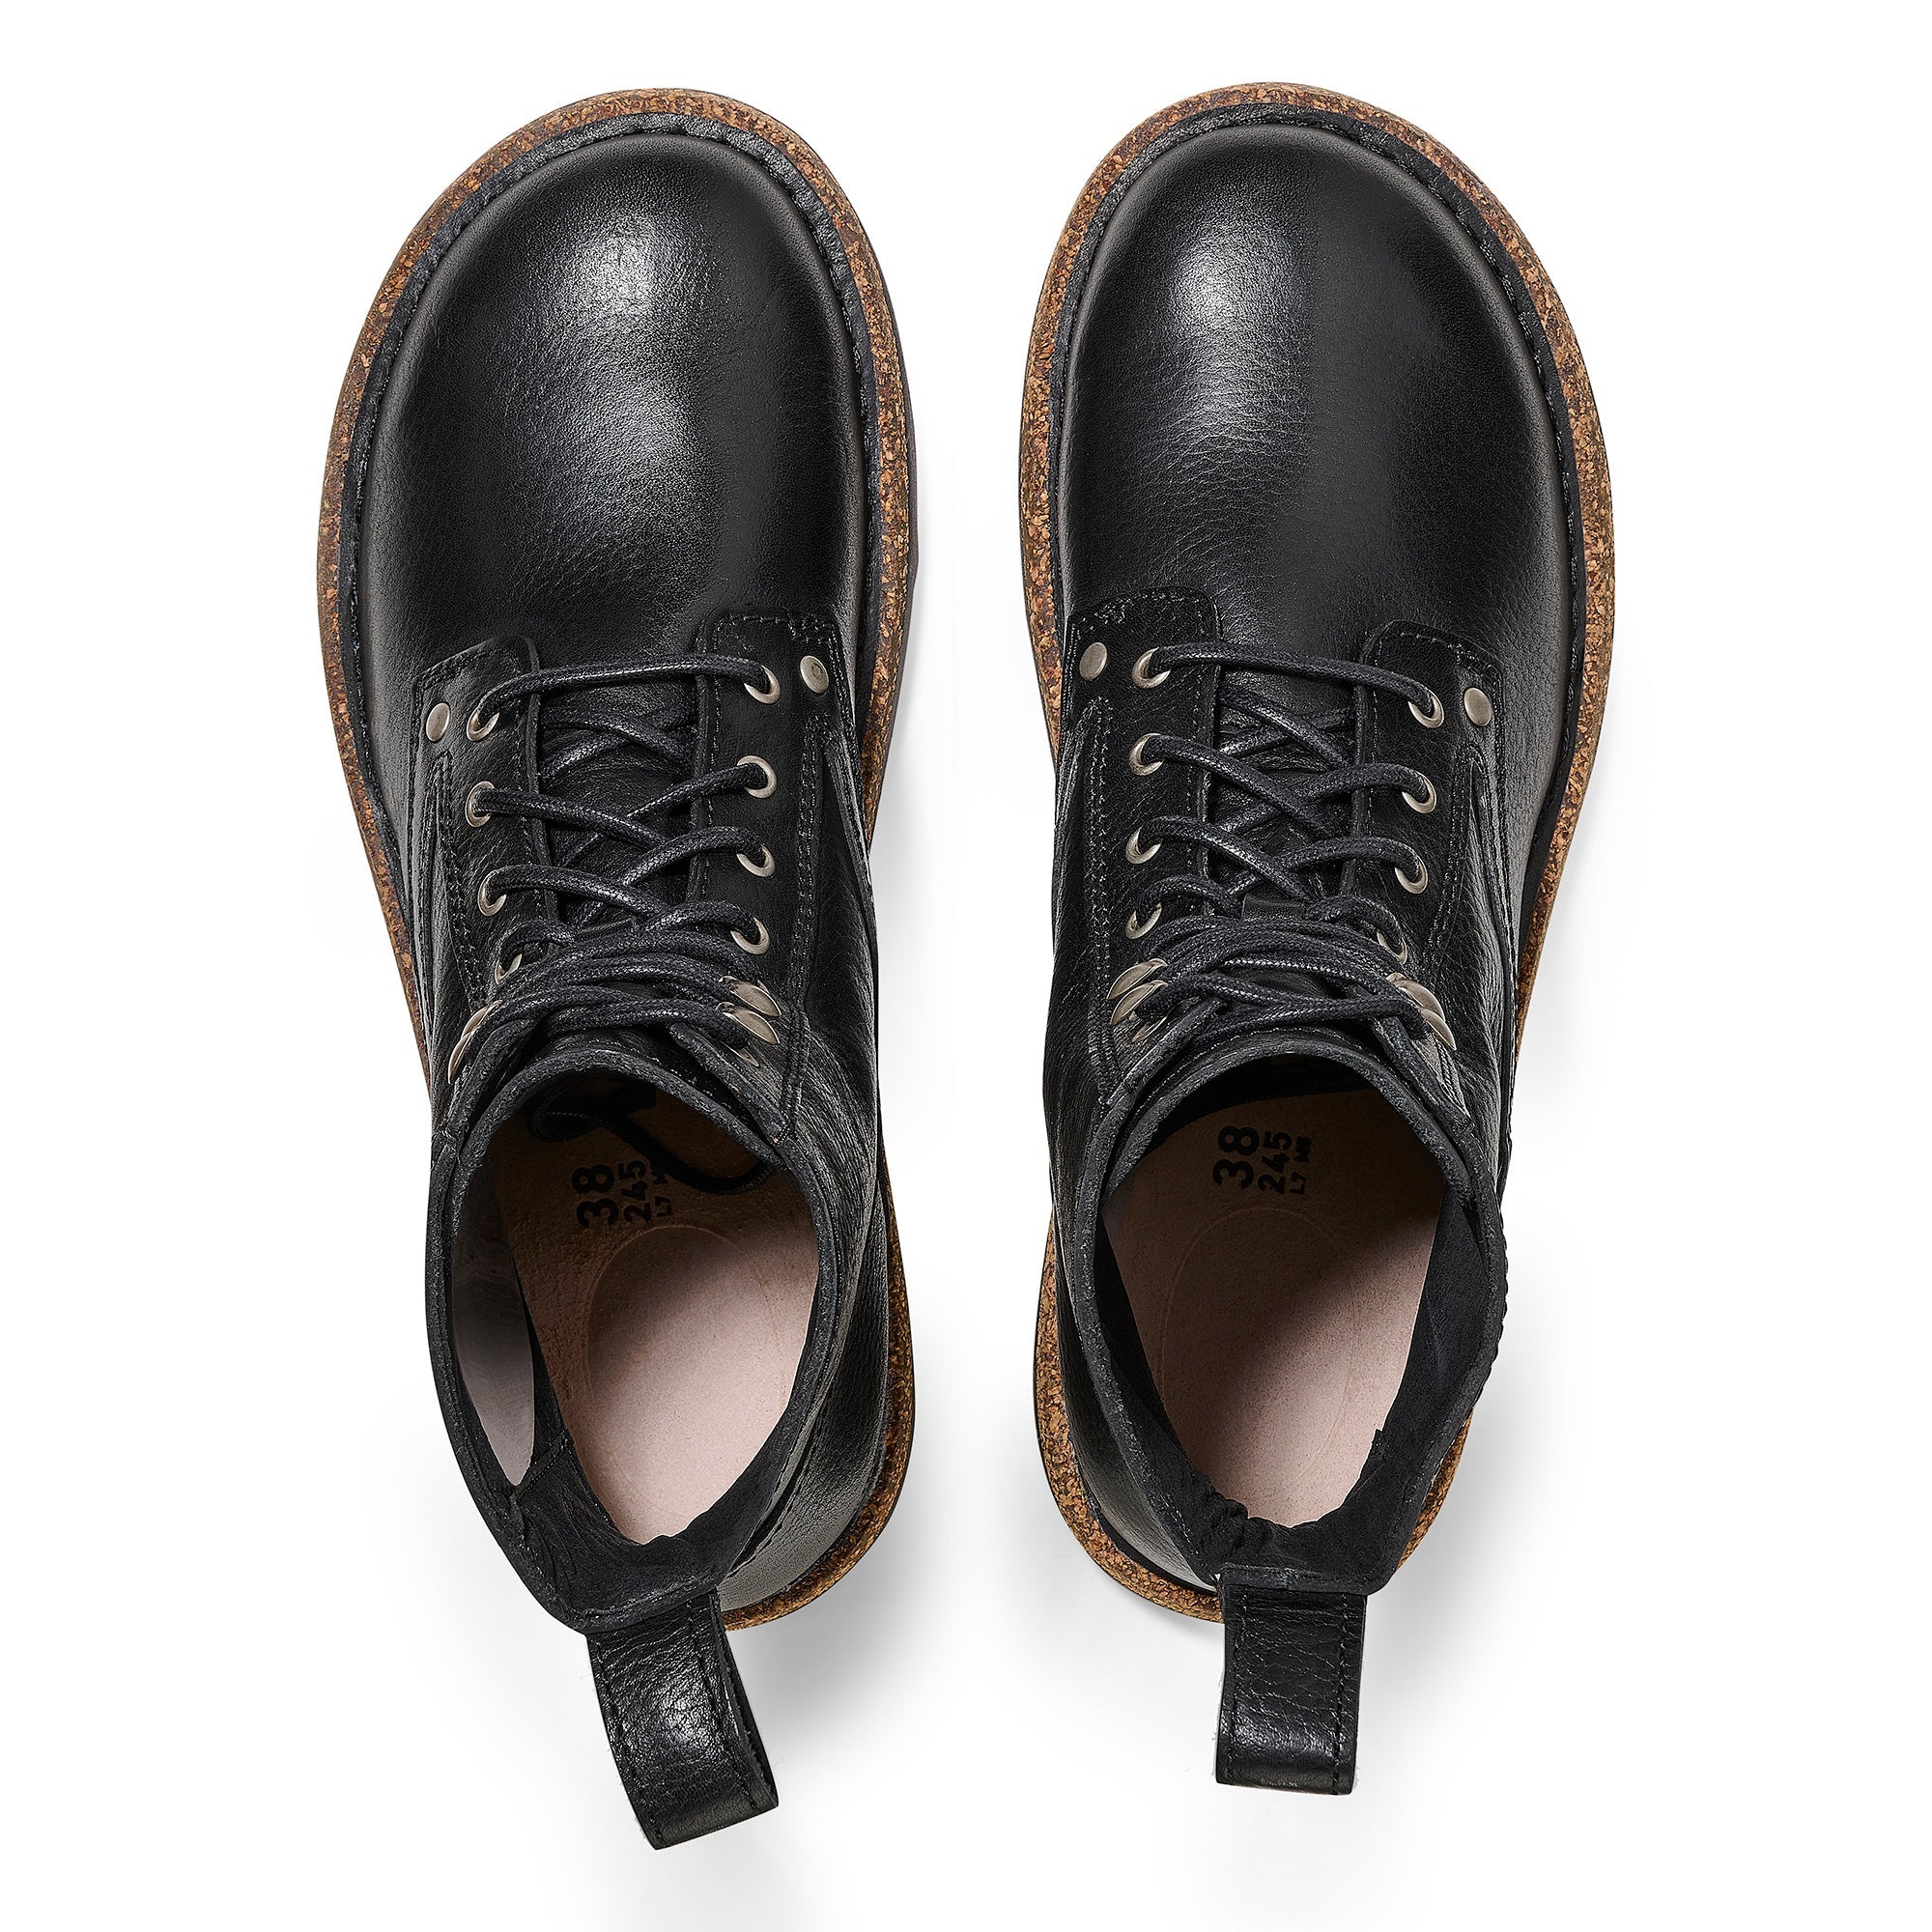 Birkenstock Bryson Nubuck Leather Boots